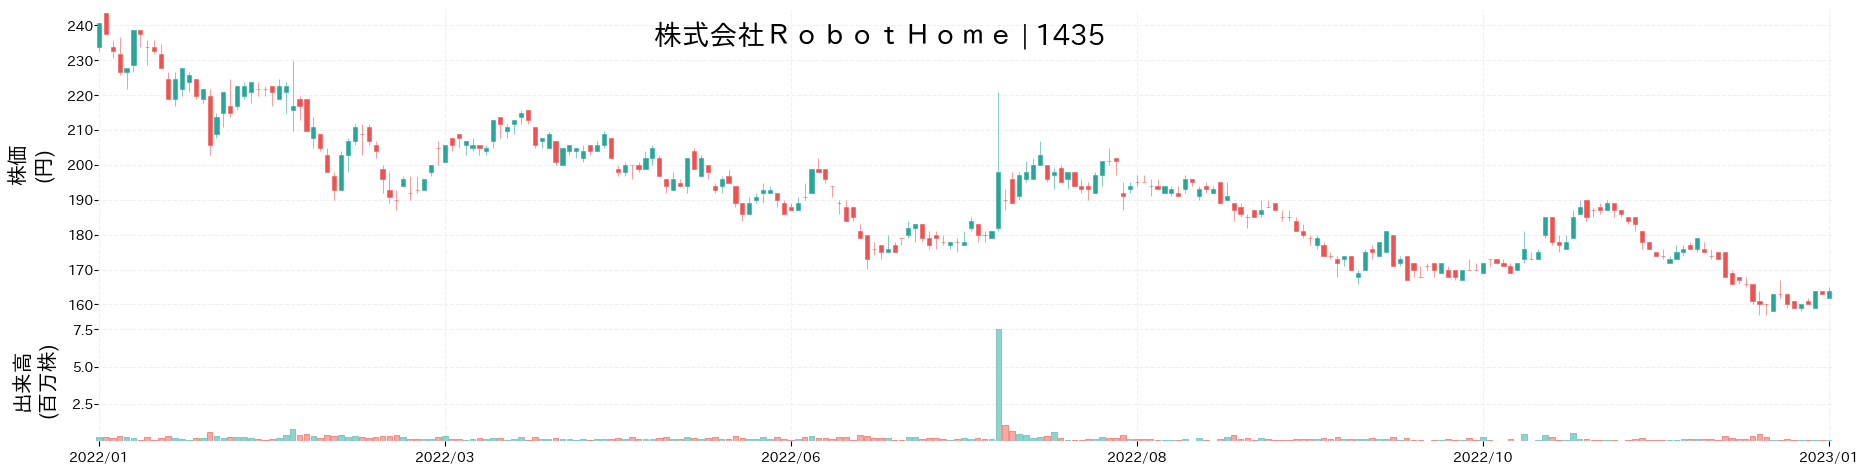 Robot Homeの株価推移(2022)